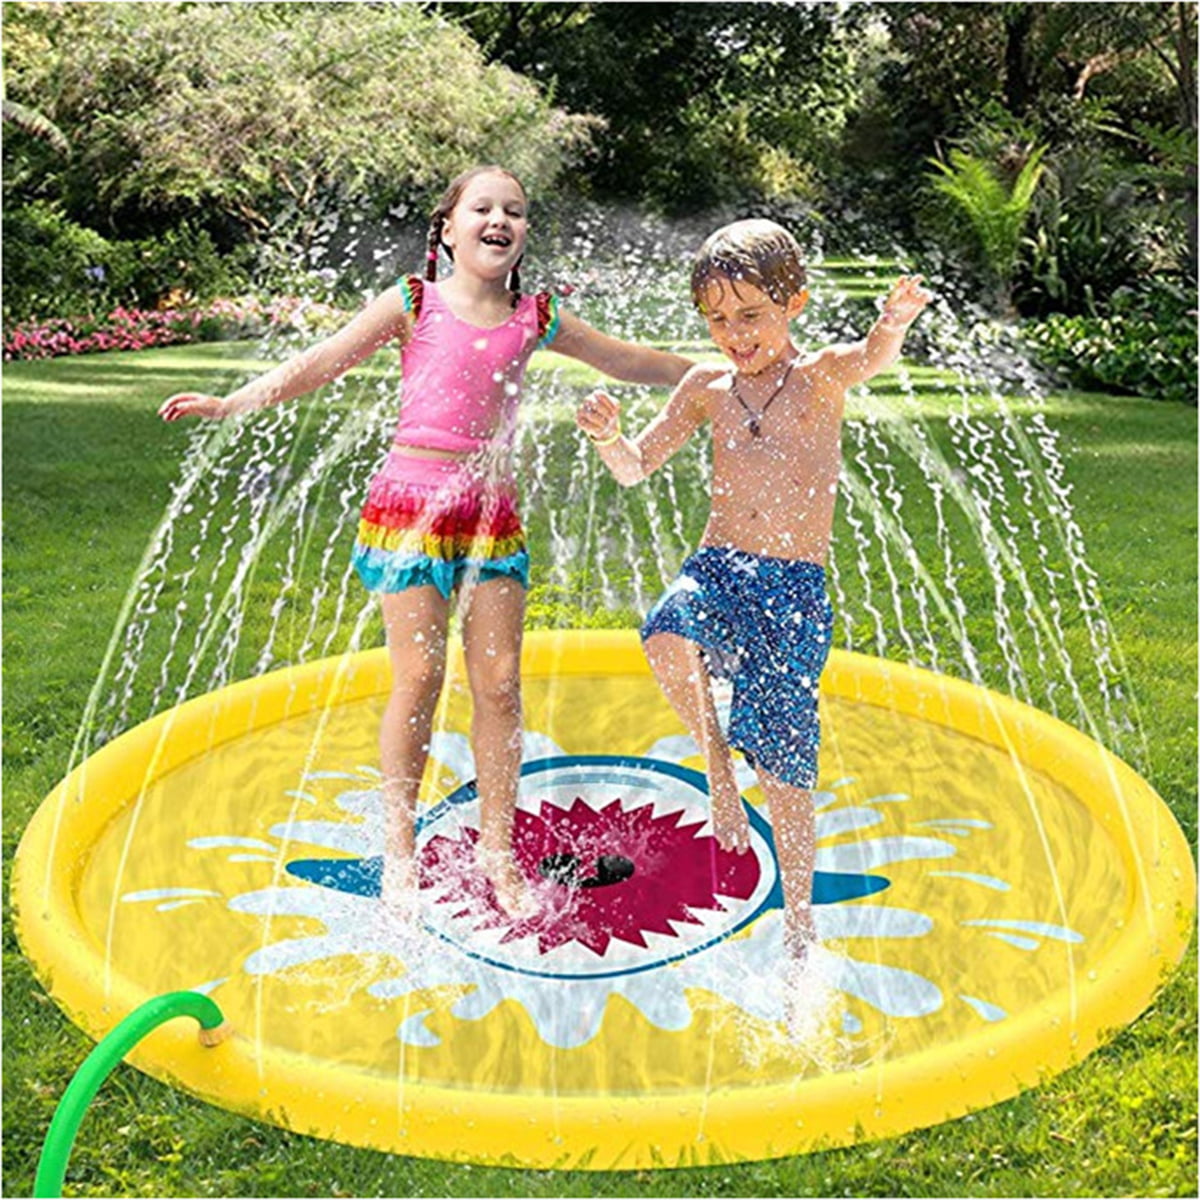 68" Sprinkle Splash Water Play Mat Children Outdoor Inflatable Sprinkler Mat Toy